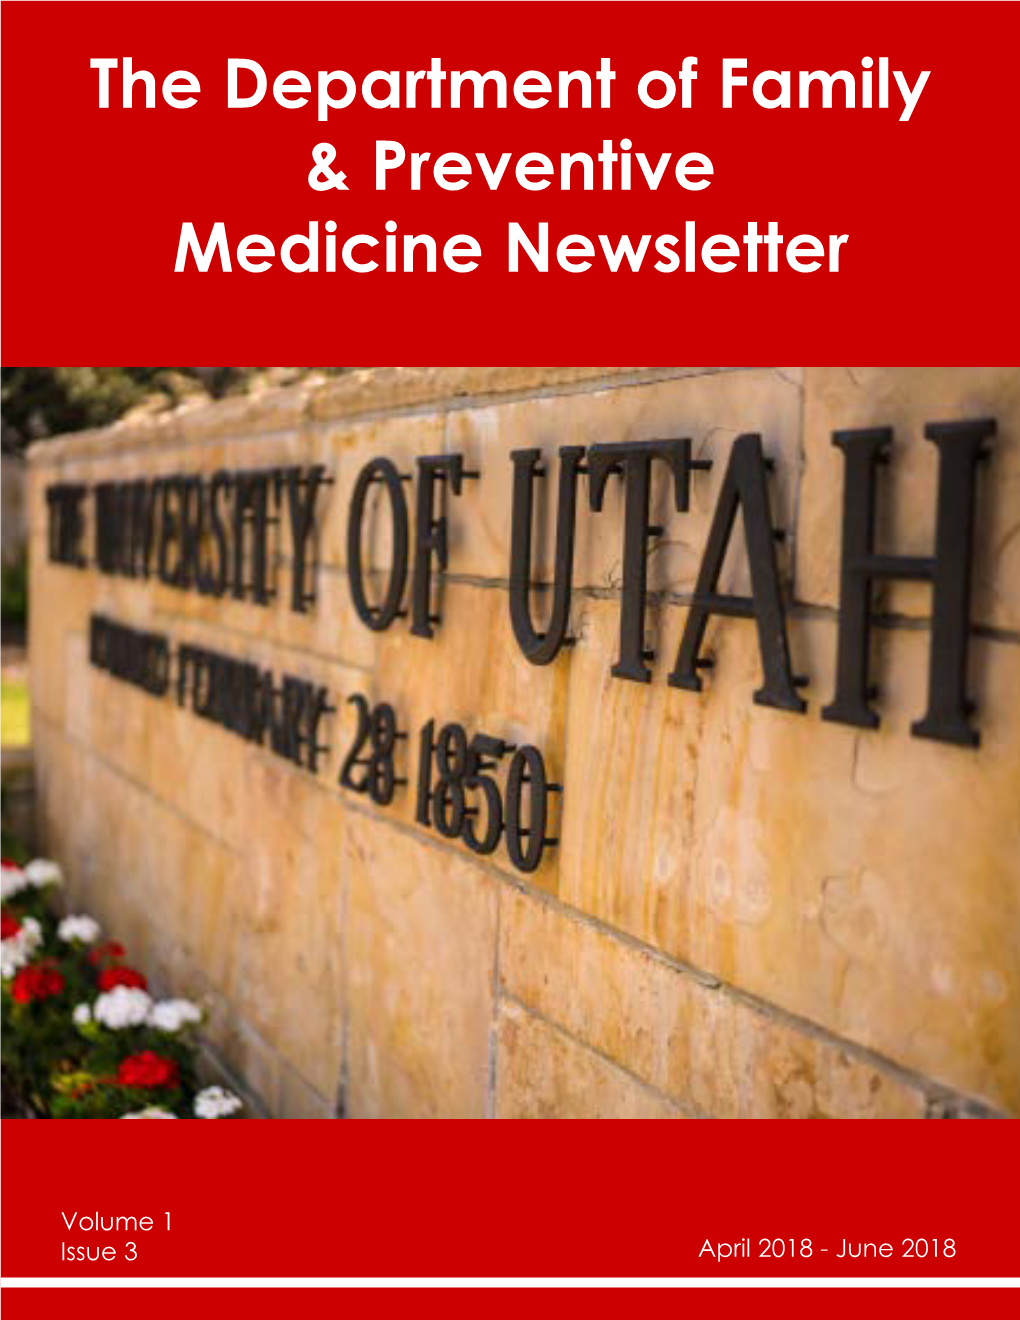 The Department of Family & Preventive Medicine Newsletter